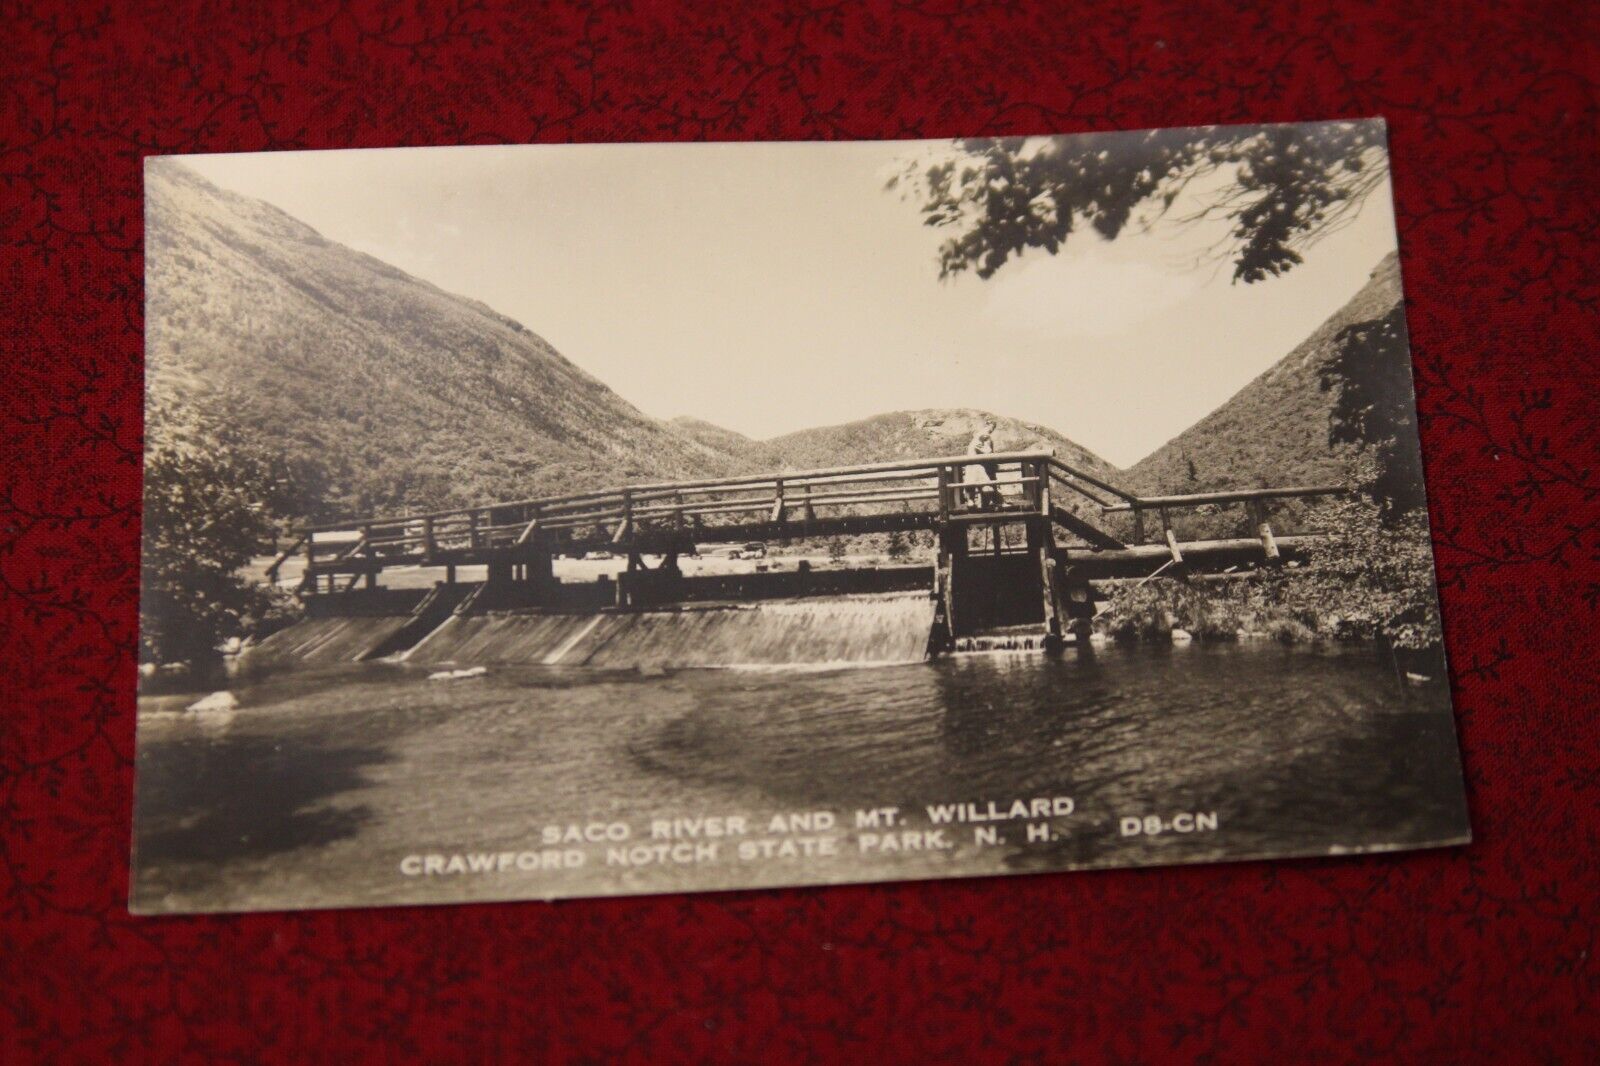 Saco River, Mt. Willard Crawford Notch State Park, New Hampshire Postcard